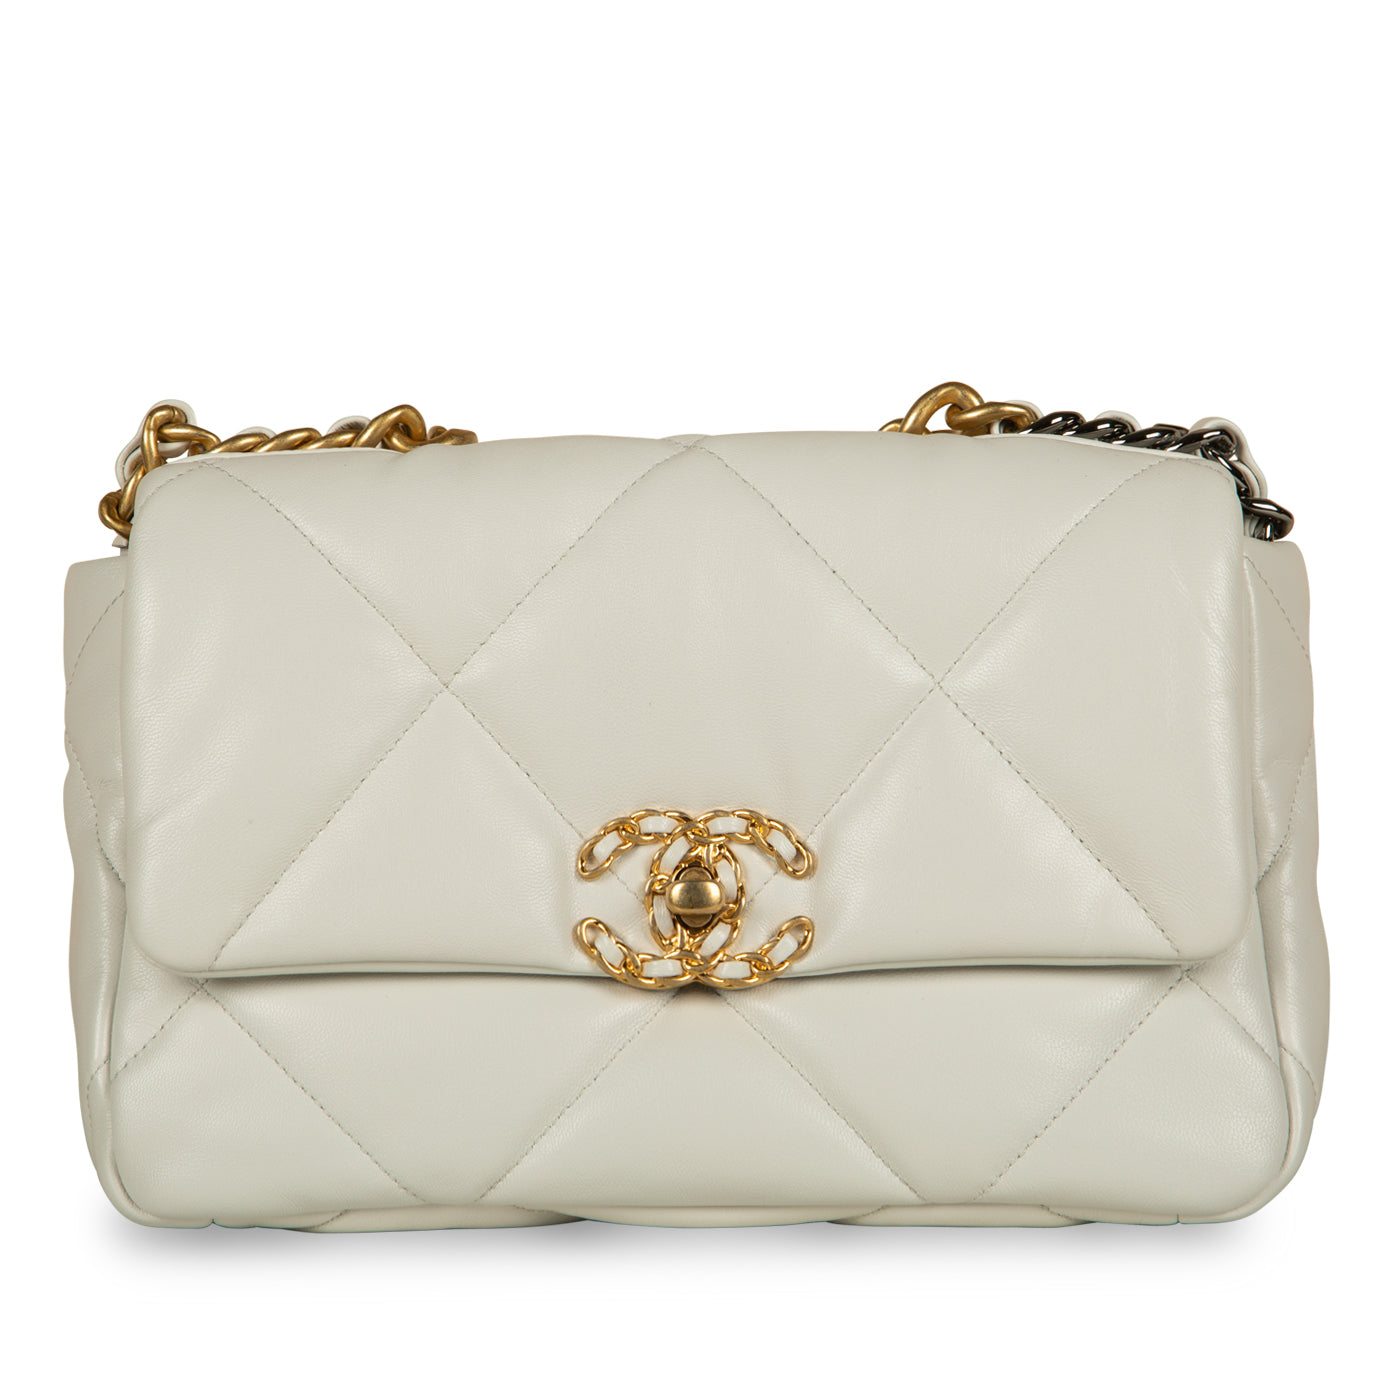 Handbag Review Medium Chanel 19  The Teacher Diva a Dallas Fashion Blog  featuring Beauty  Lifestyle